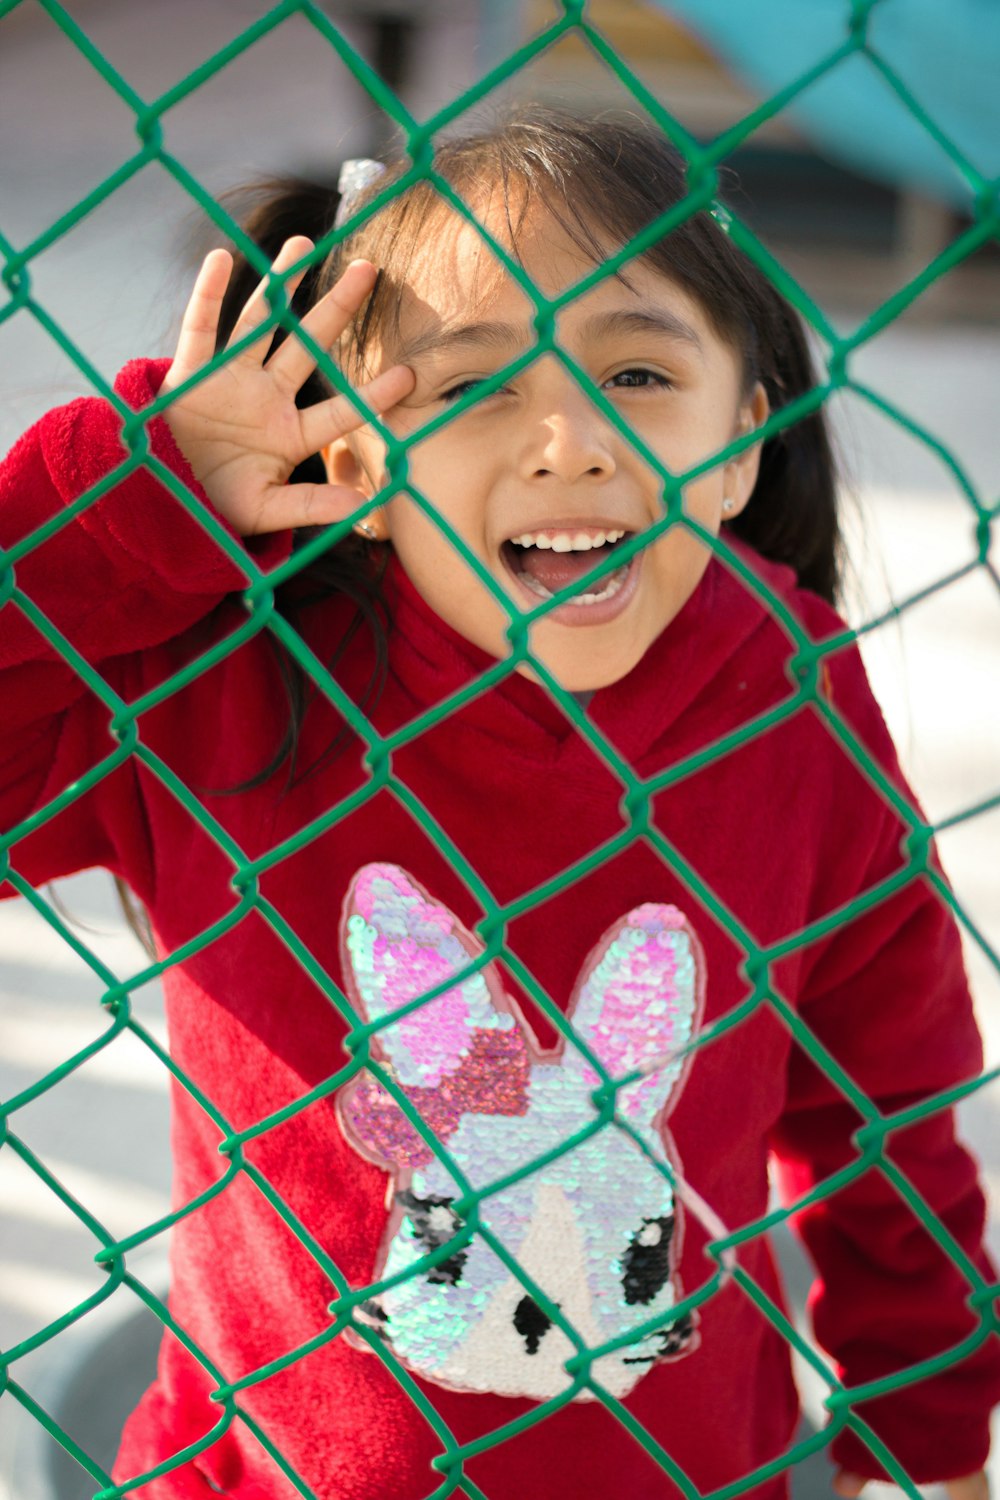 a little girl standing behind a green fence